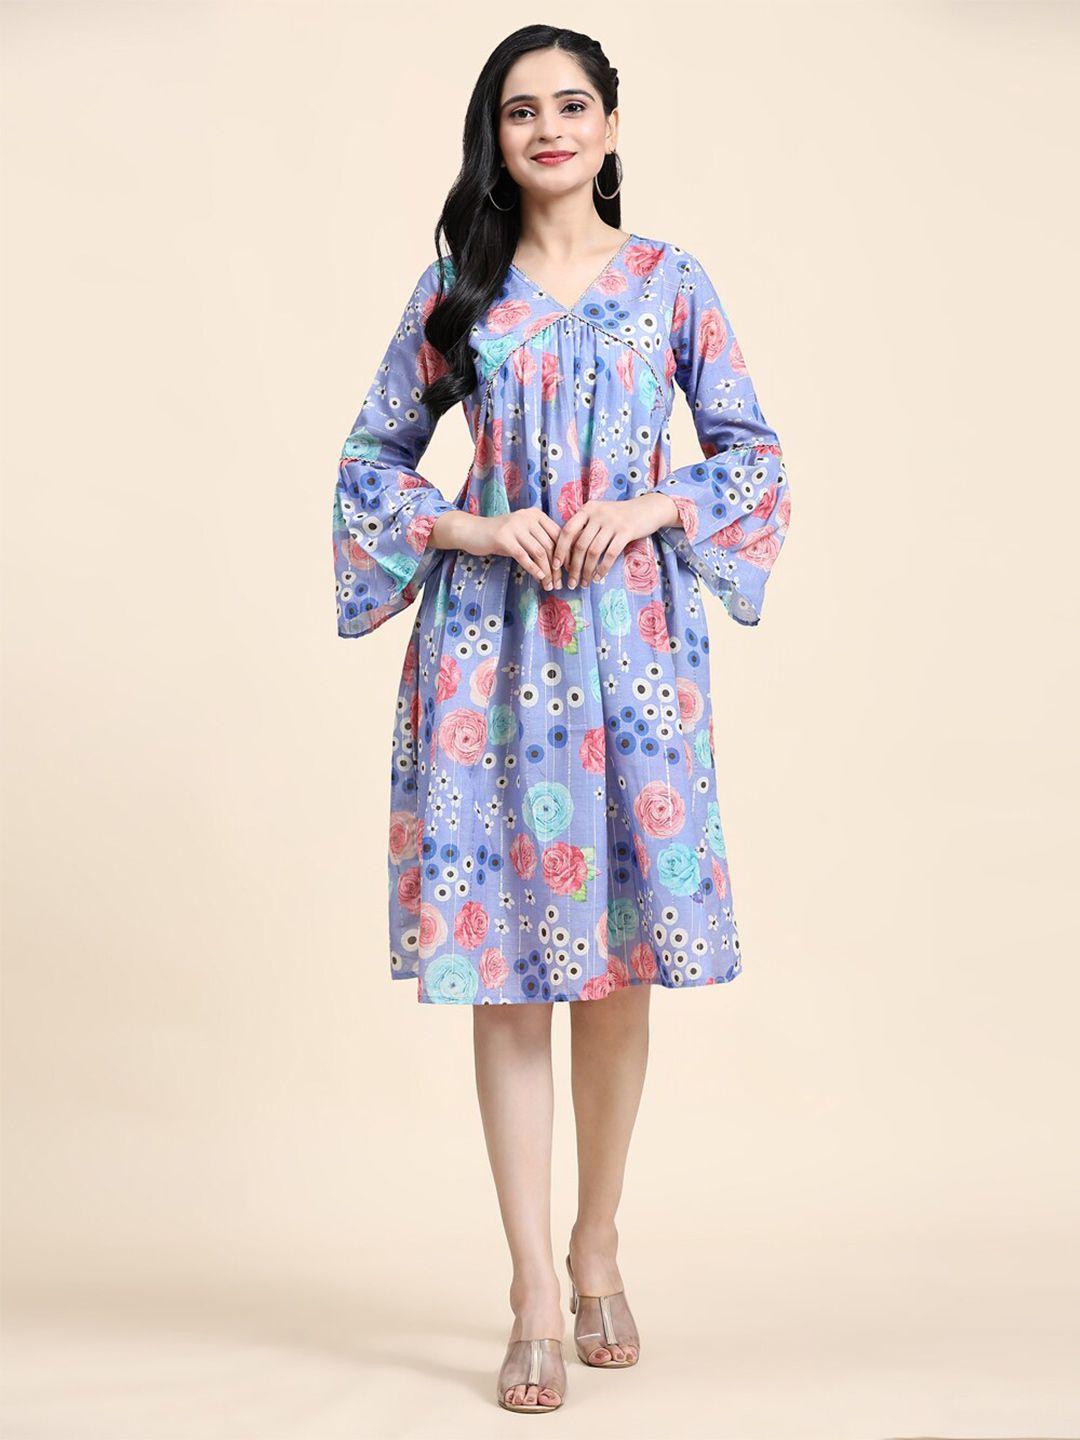 growish floral printed bell sleeves a-line dress